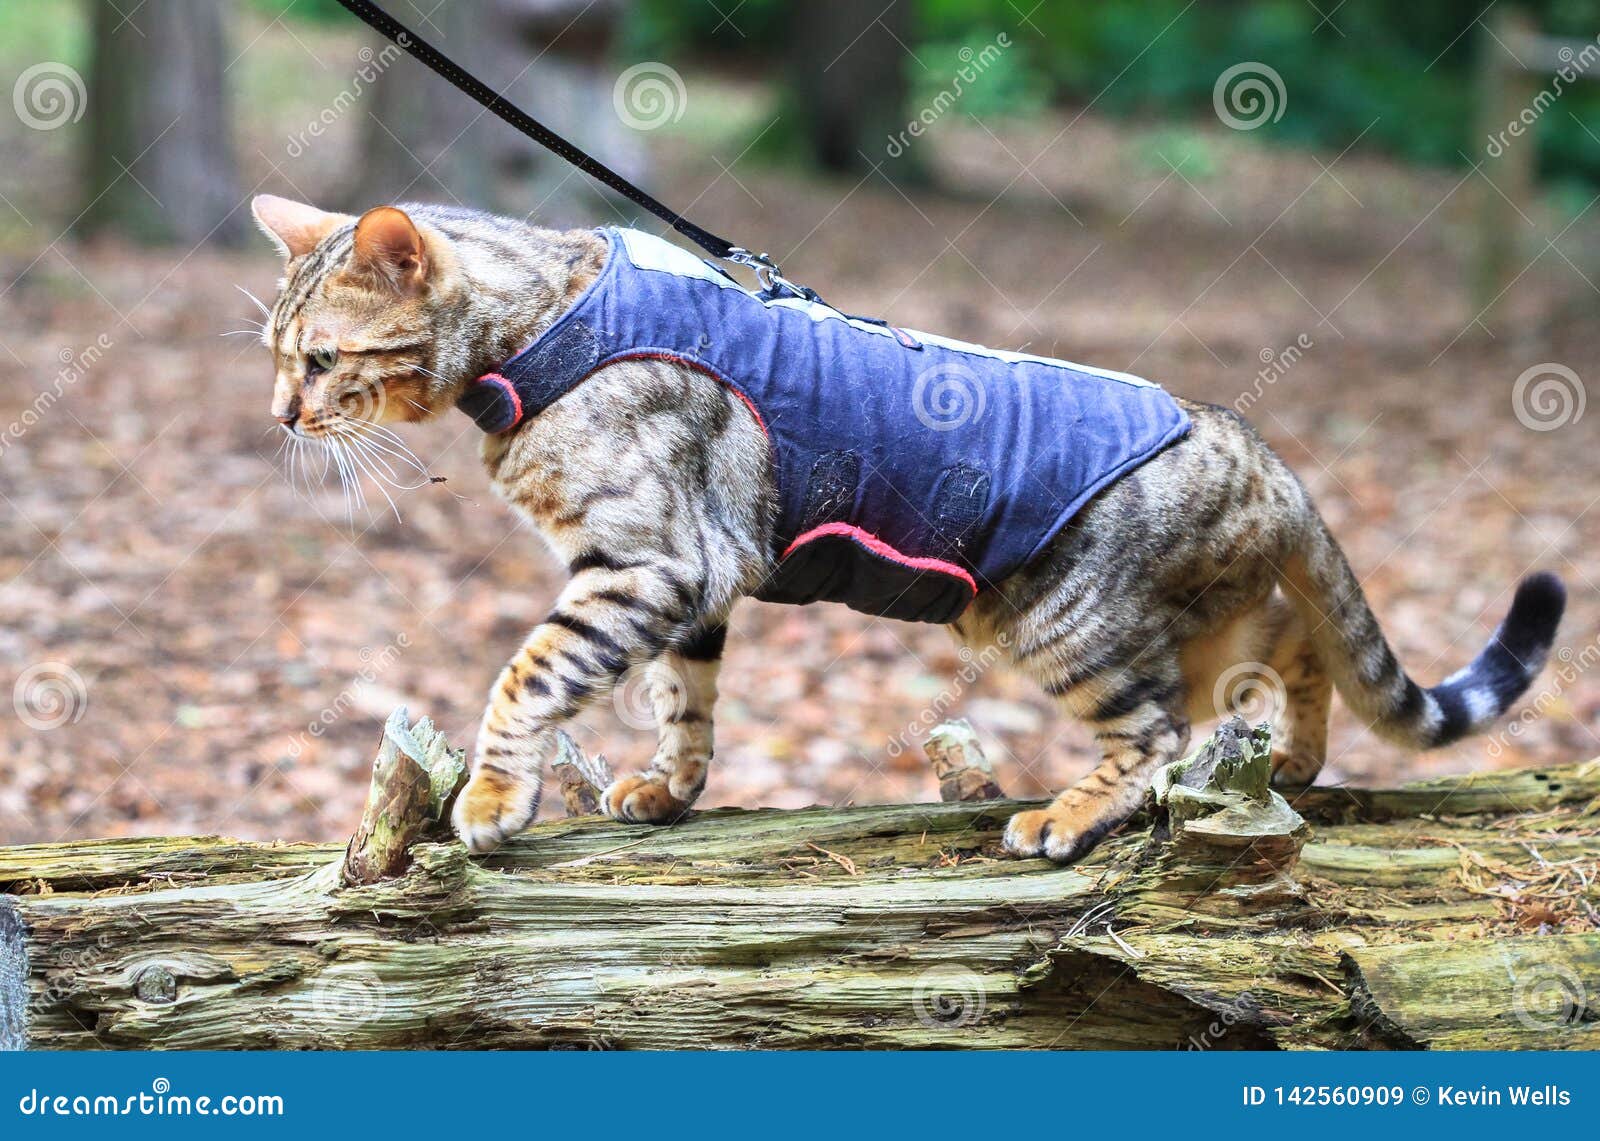 a bengal cat in a harness